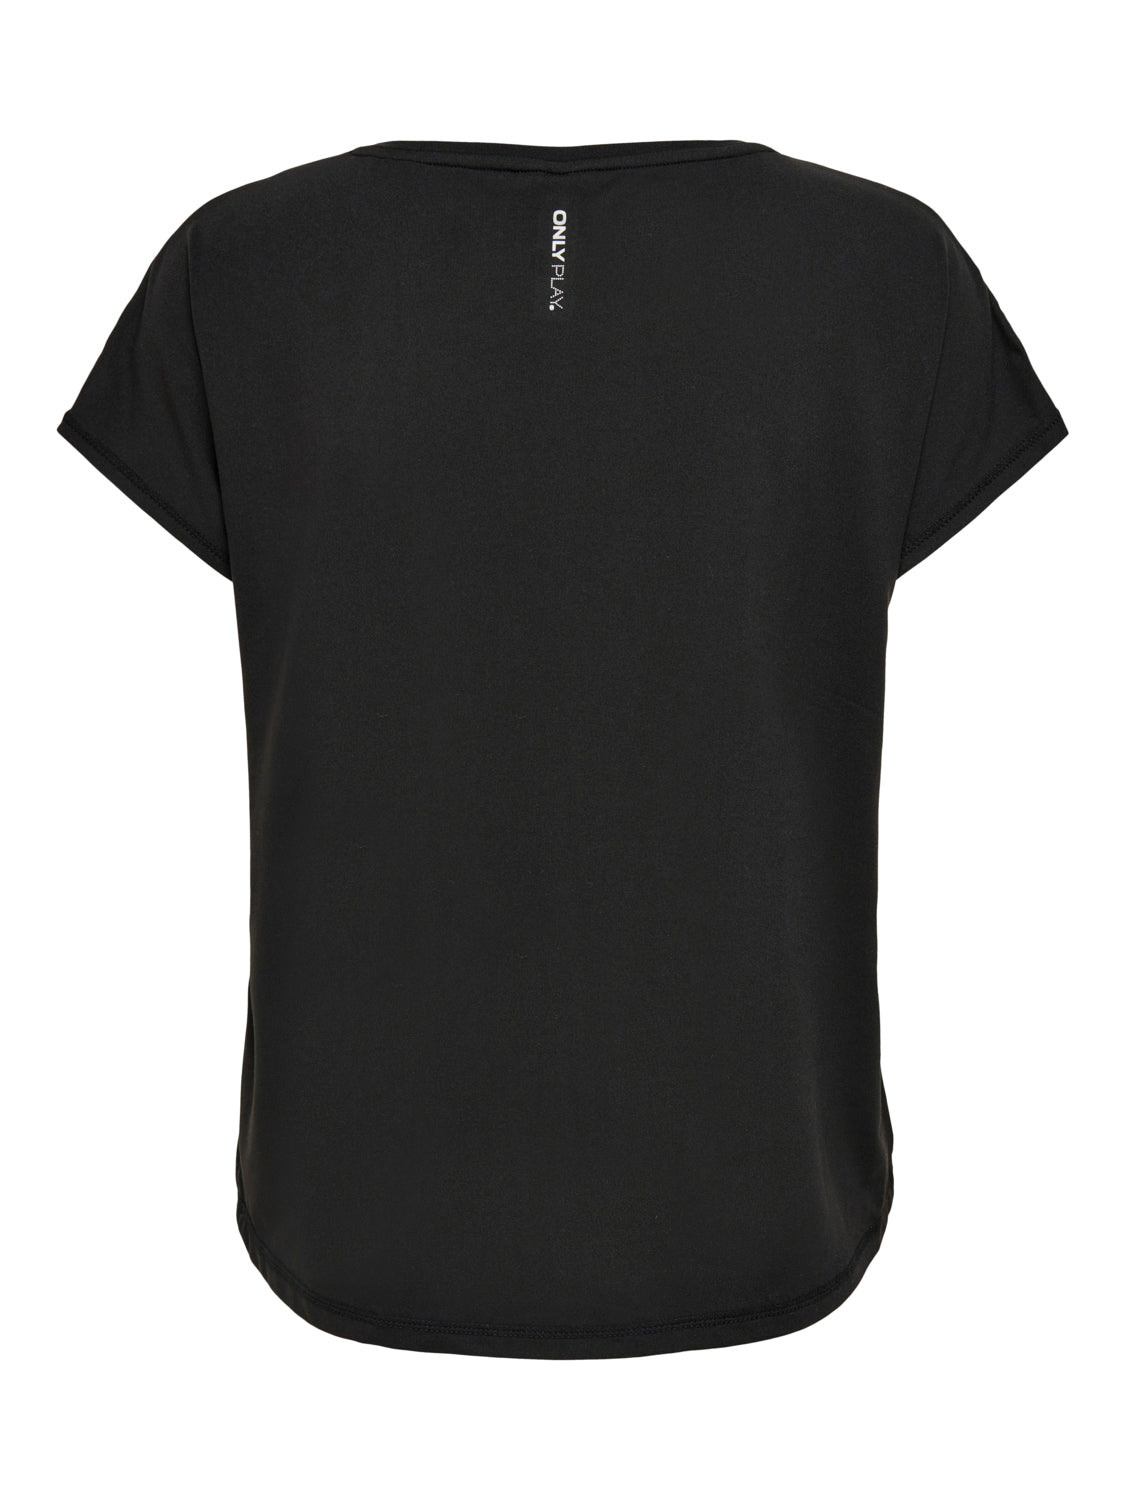 ONPAUBREE T-Shirt - Black